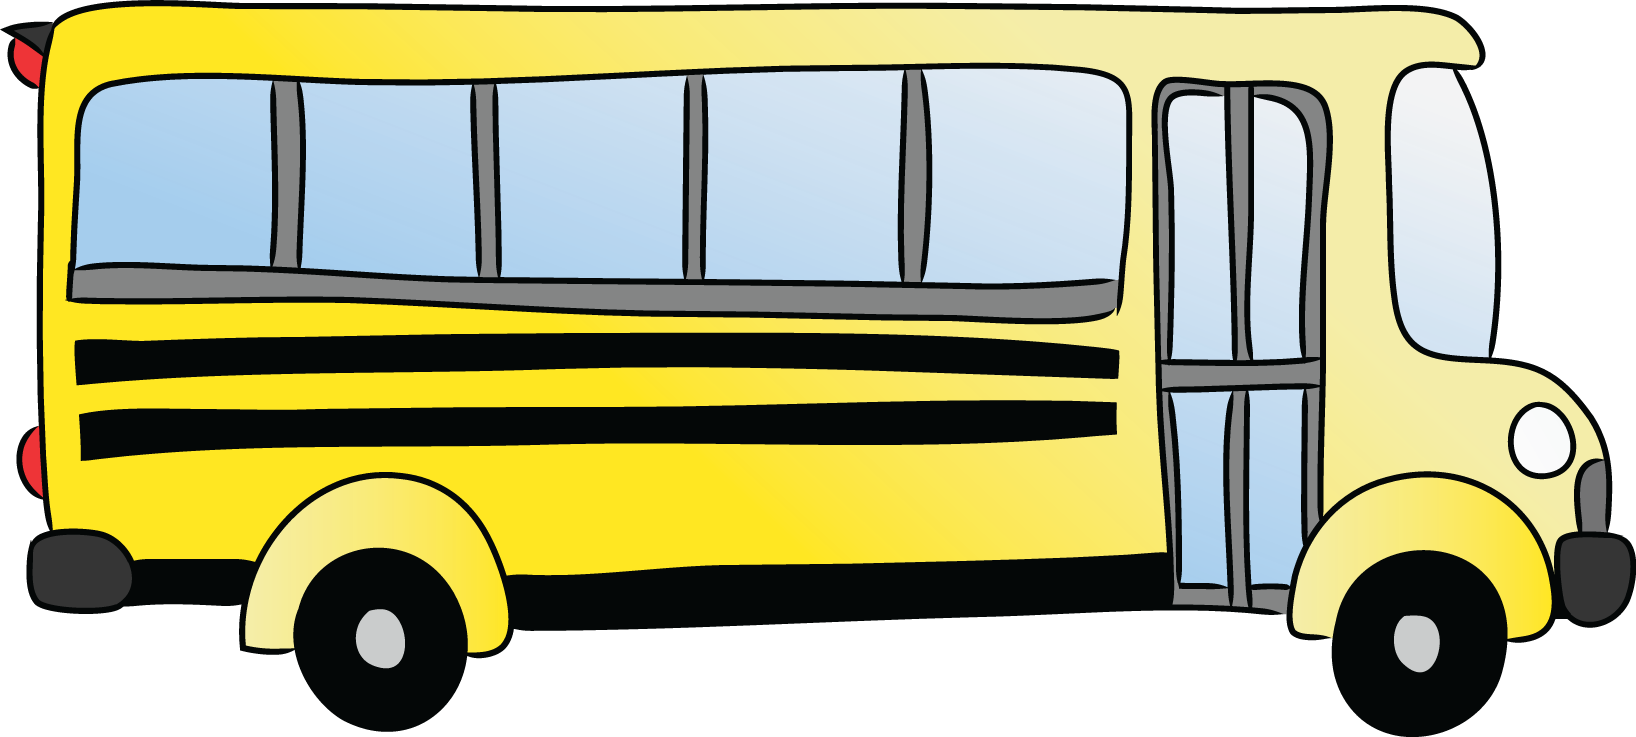 School bus clipart 3